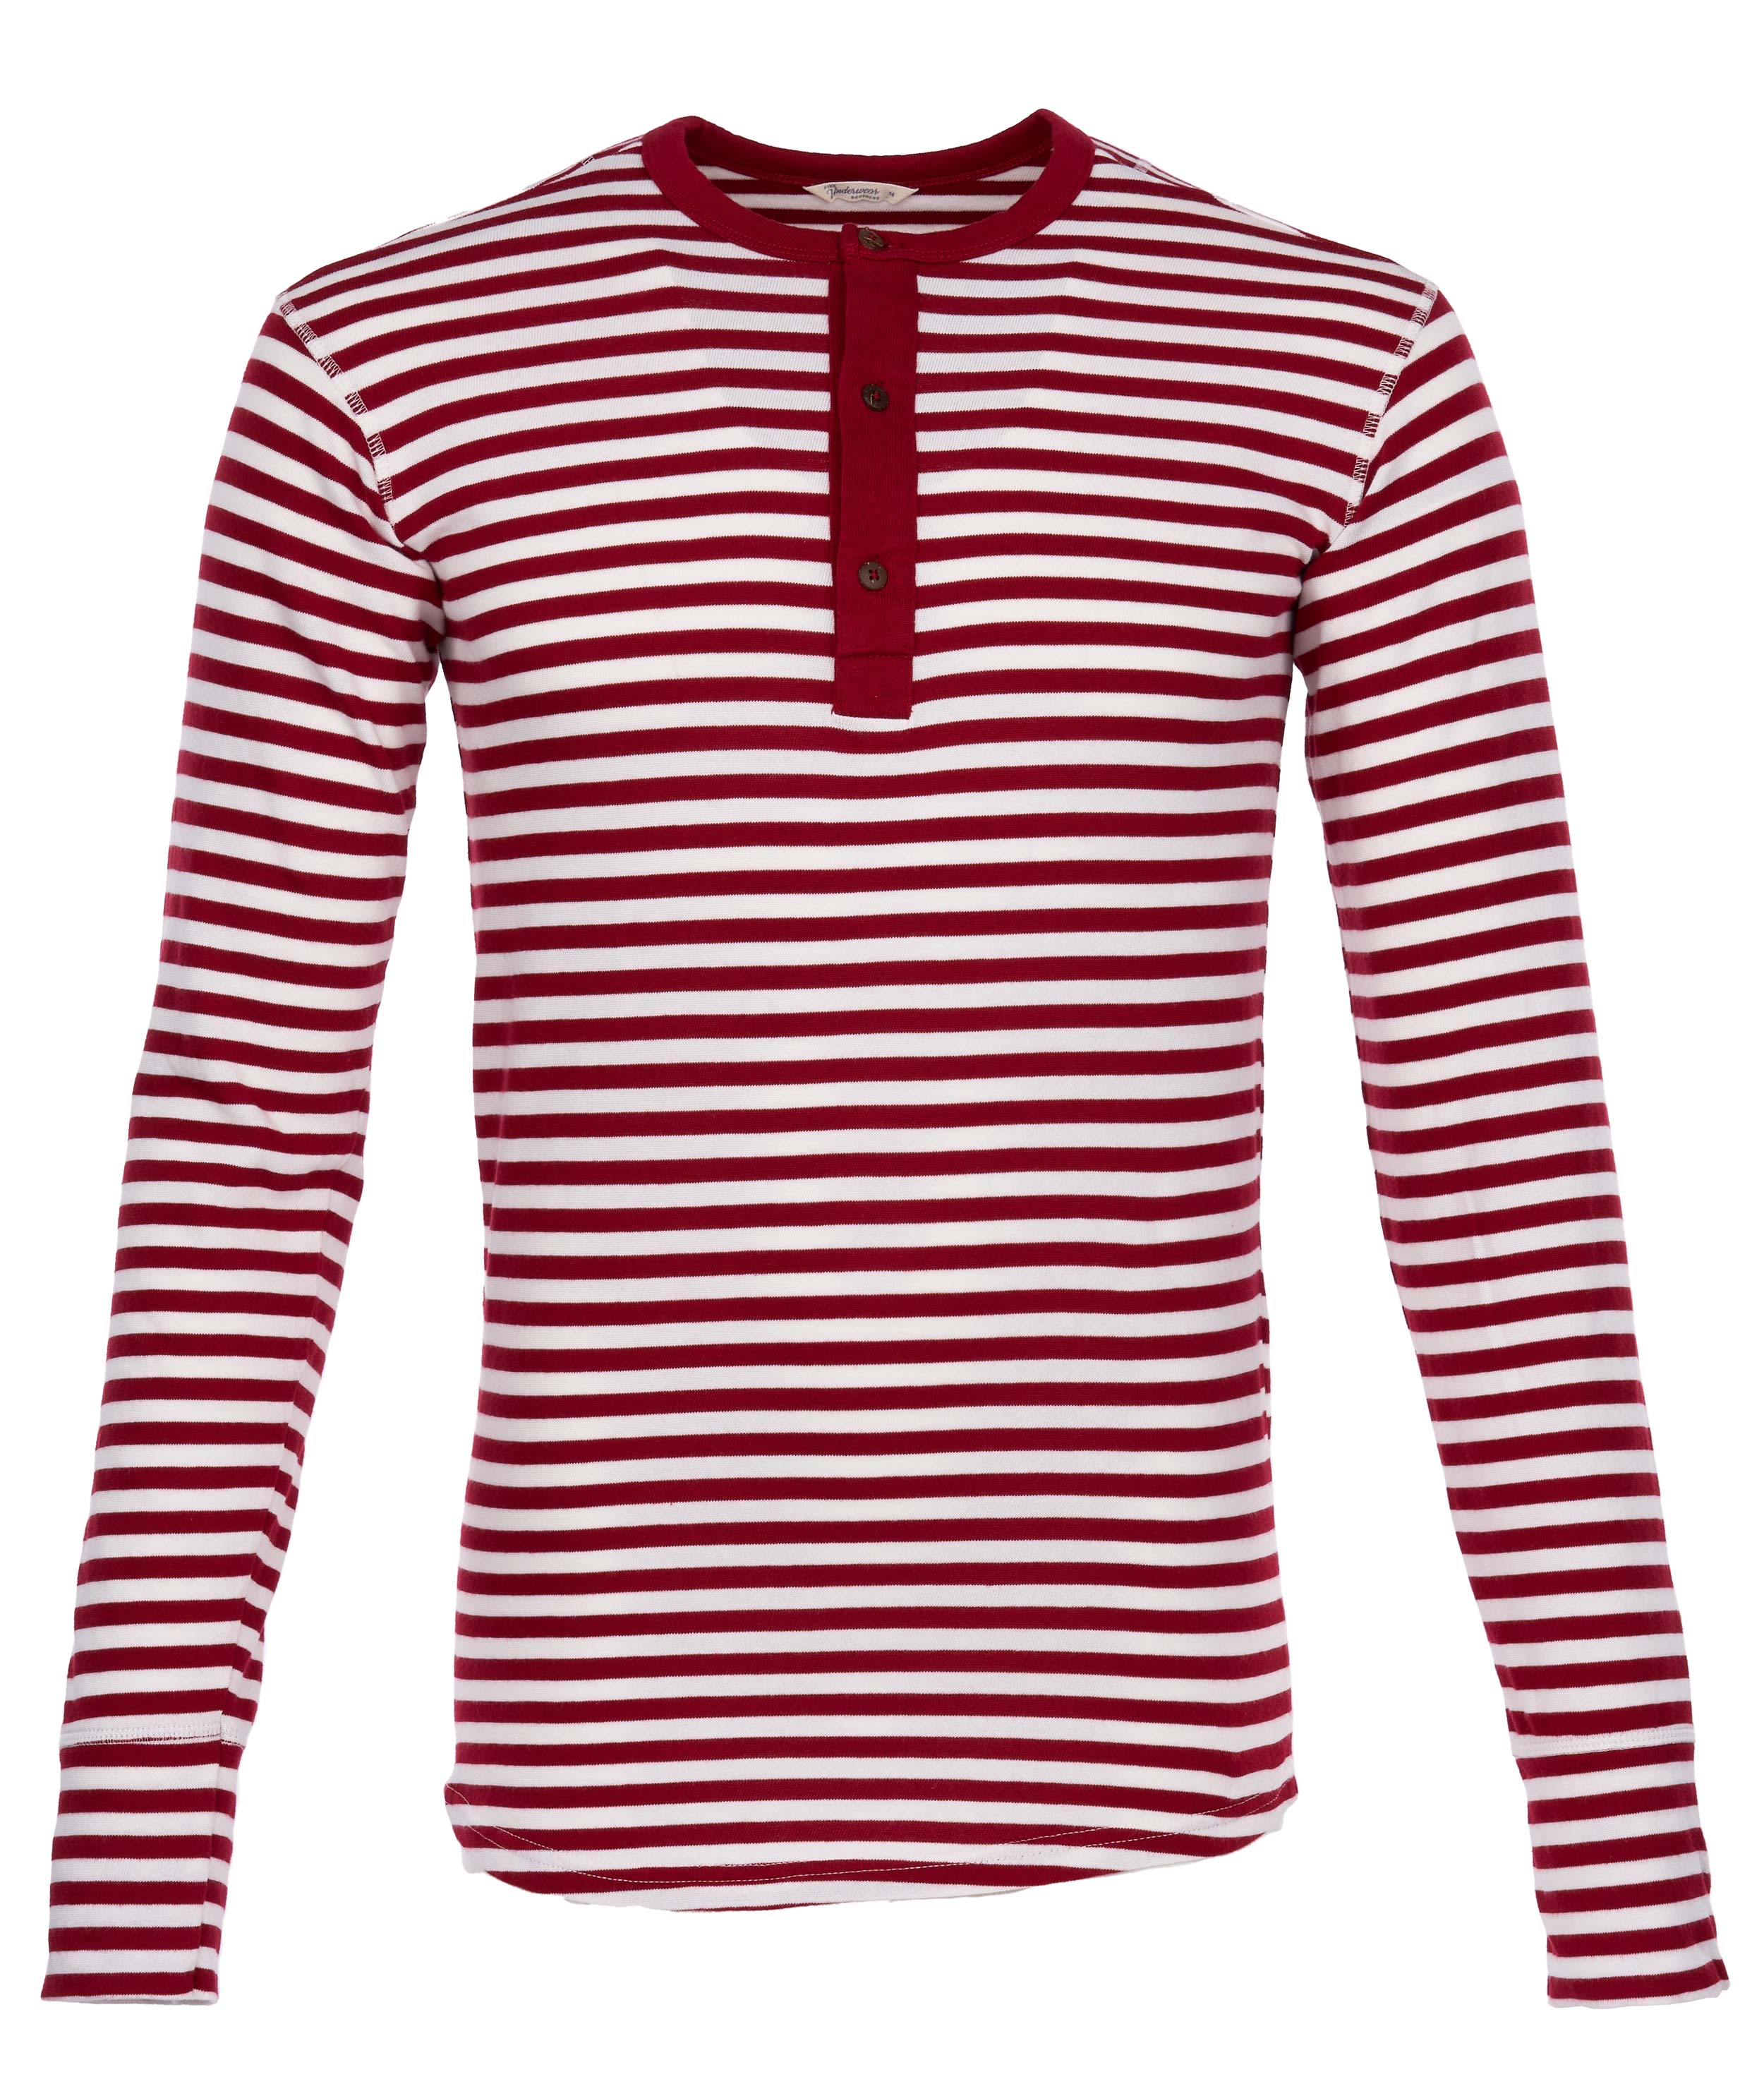 1927 Henley Shirt long sleeve Norfolk red